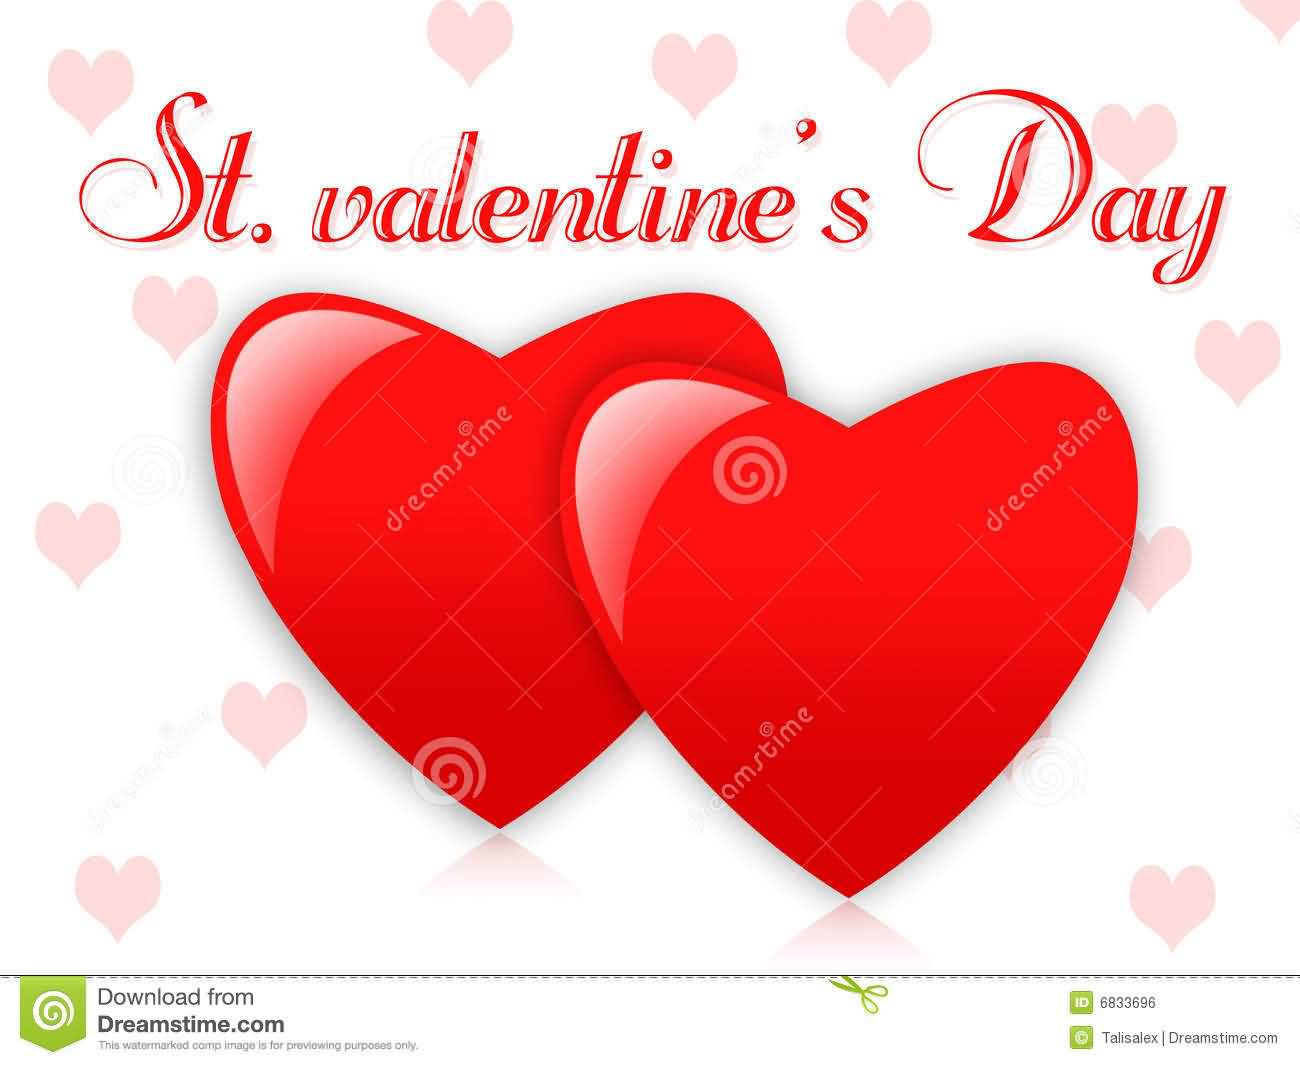 Saint Valentine’s Day Two Hearts Illustration